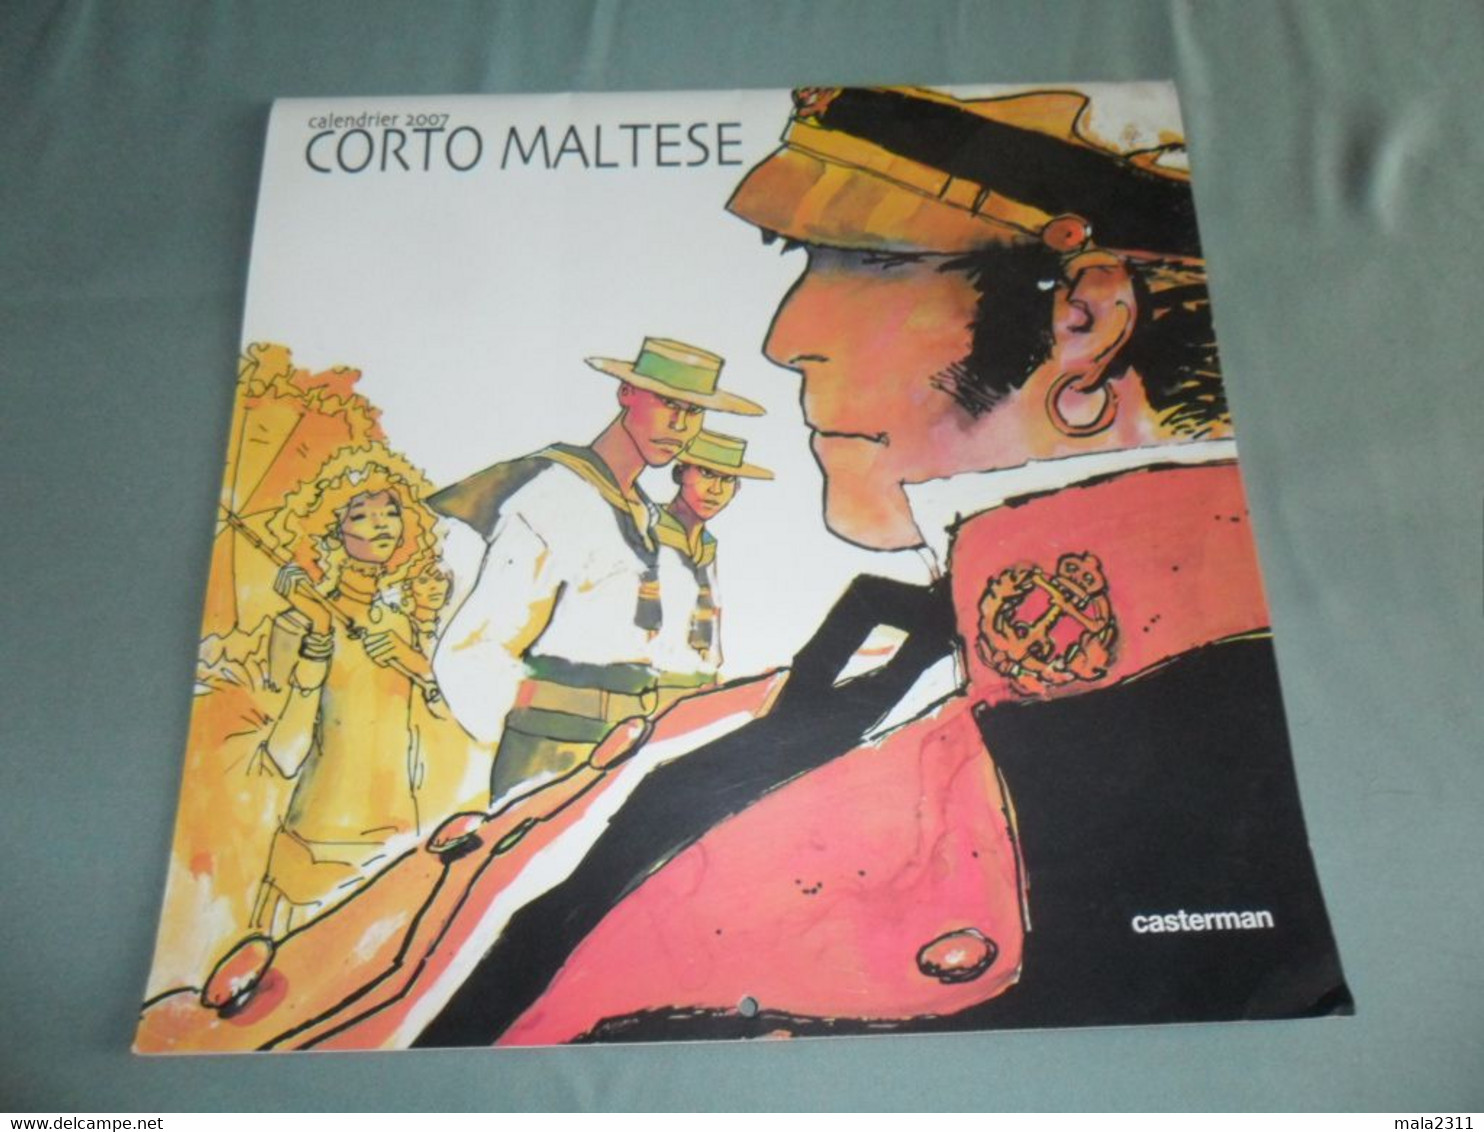 CORTO MALTESE - HUGO PRATT  /  CALENDRIER 2007 ..... / CASTERMAN - Agende & Calendari